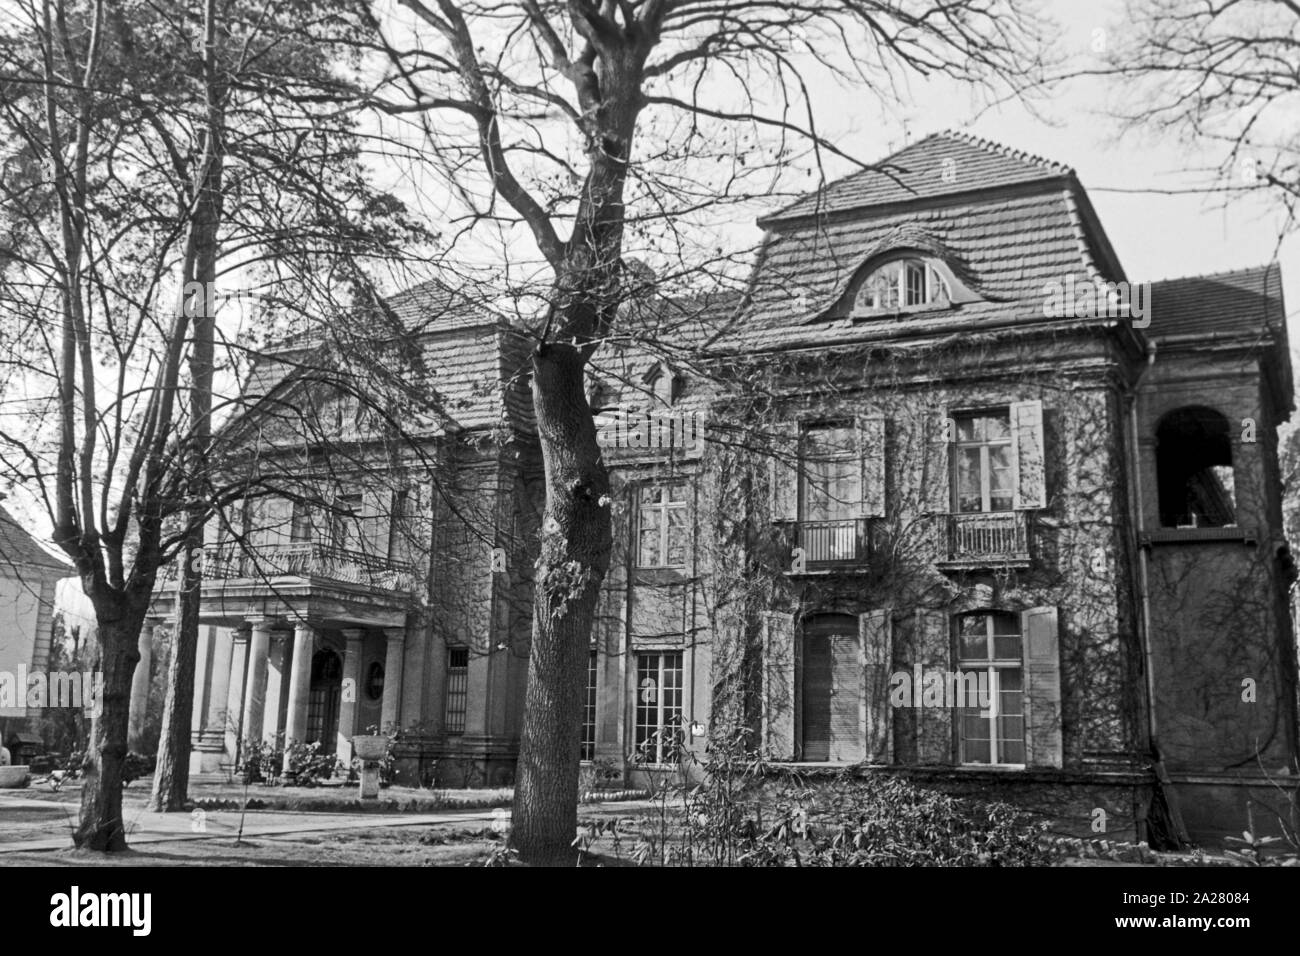 Edle Villa in Berlin, Deutschland 1963. Noble mansion at Berlin, Germany 1963. Stock Photo